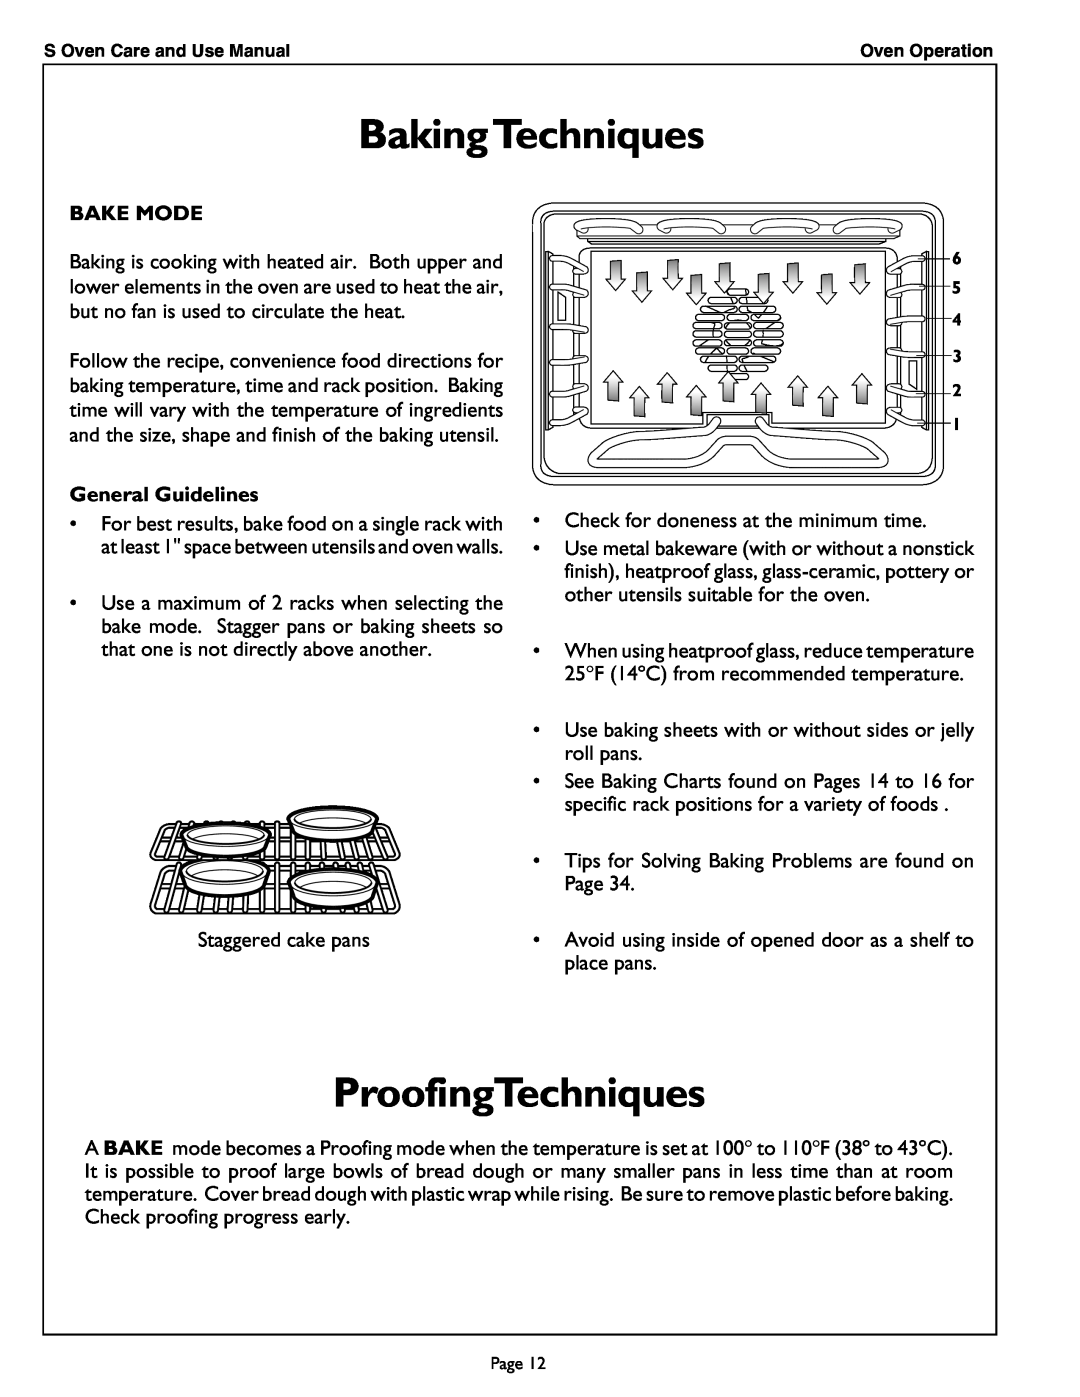 Thermador SCD302 manual BakingTechniques, ProofingTechniques, Bake Mode, General Guidelines 